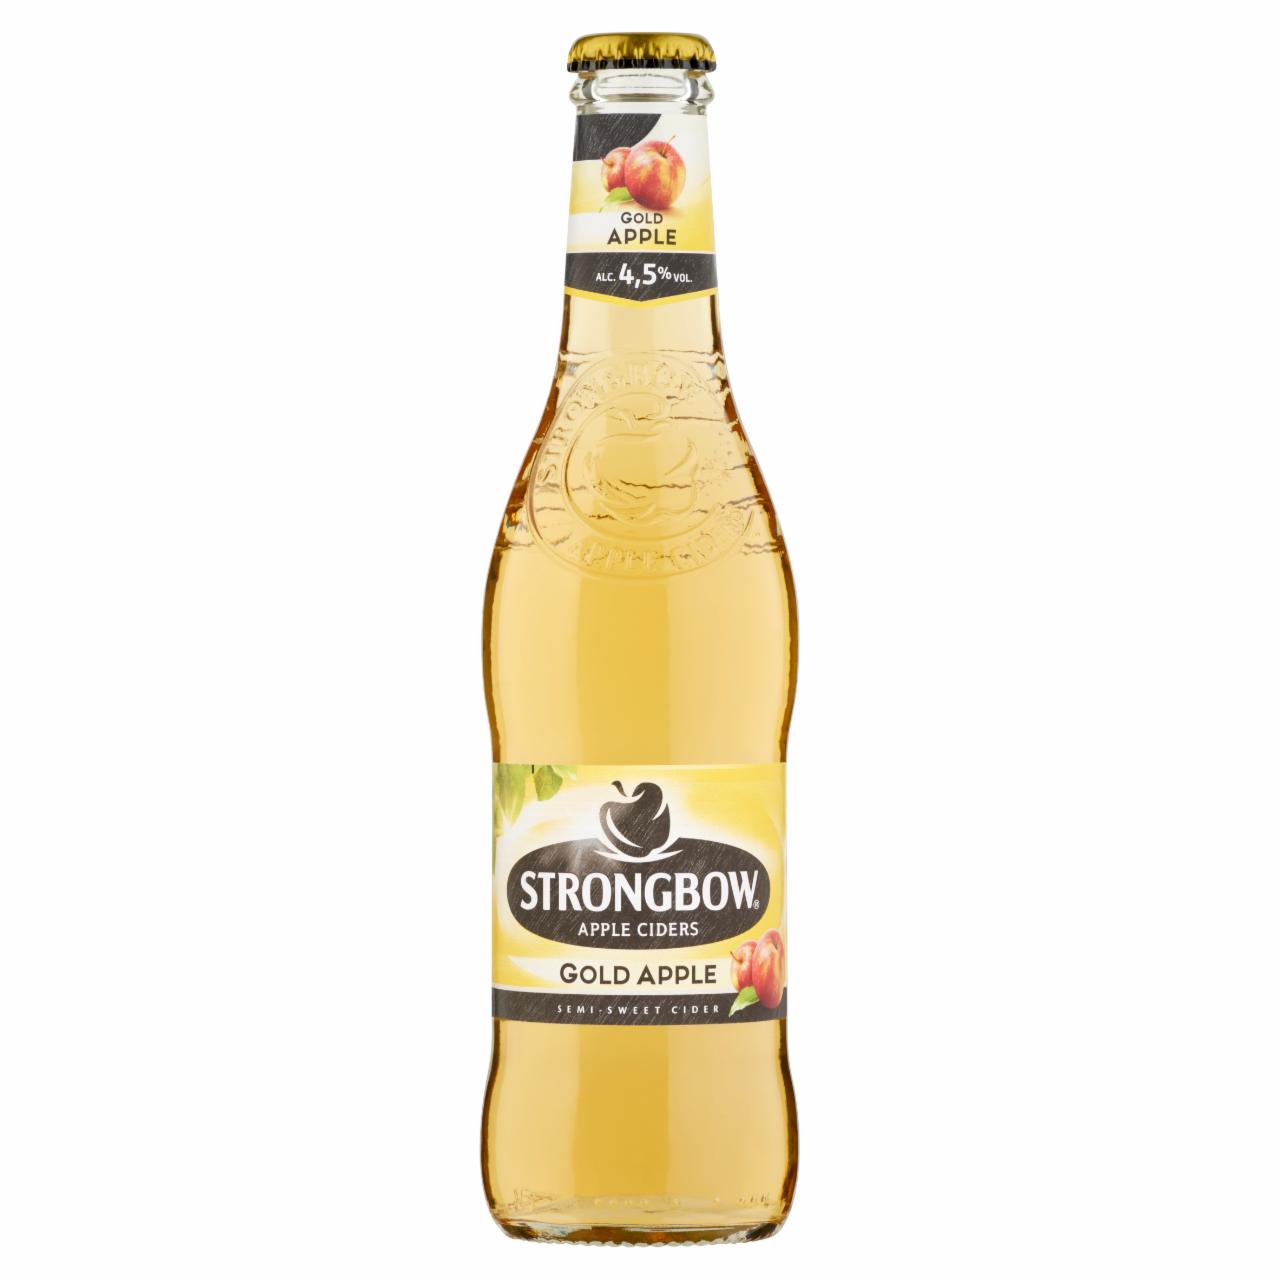 Képek - Strongbow Gold Apple alma ízű cider 4,5% 330 ml üveg